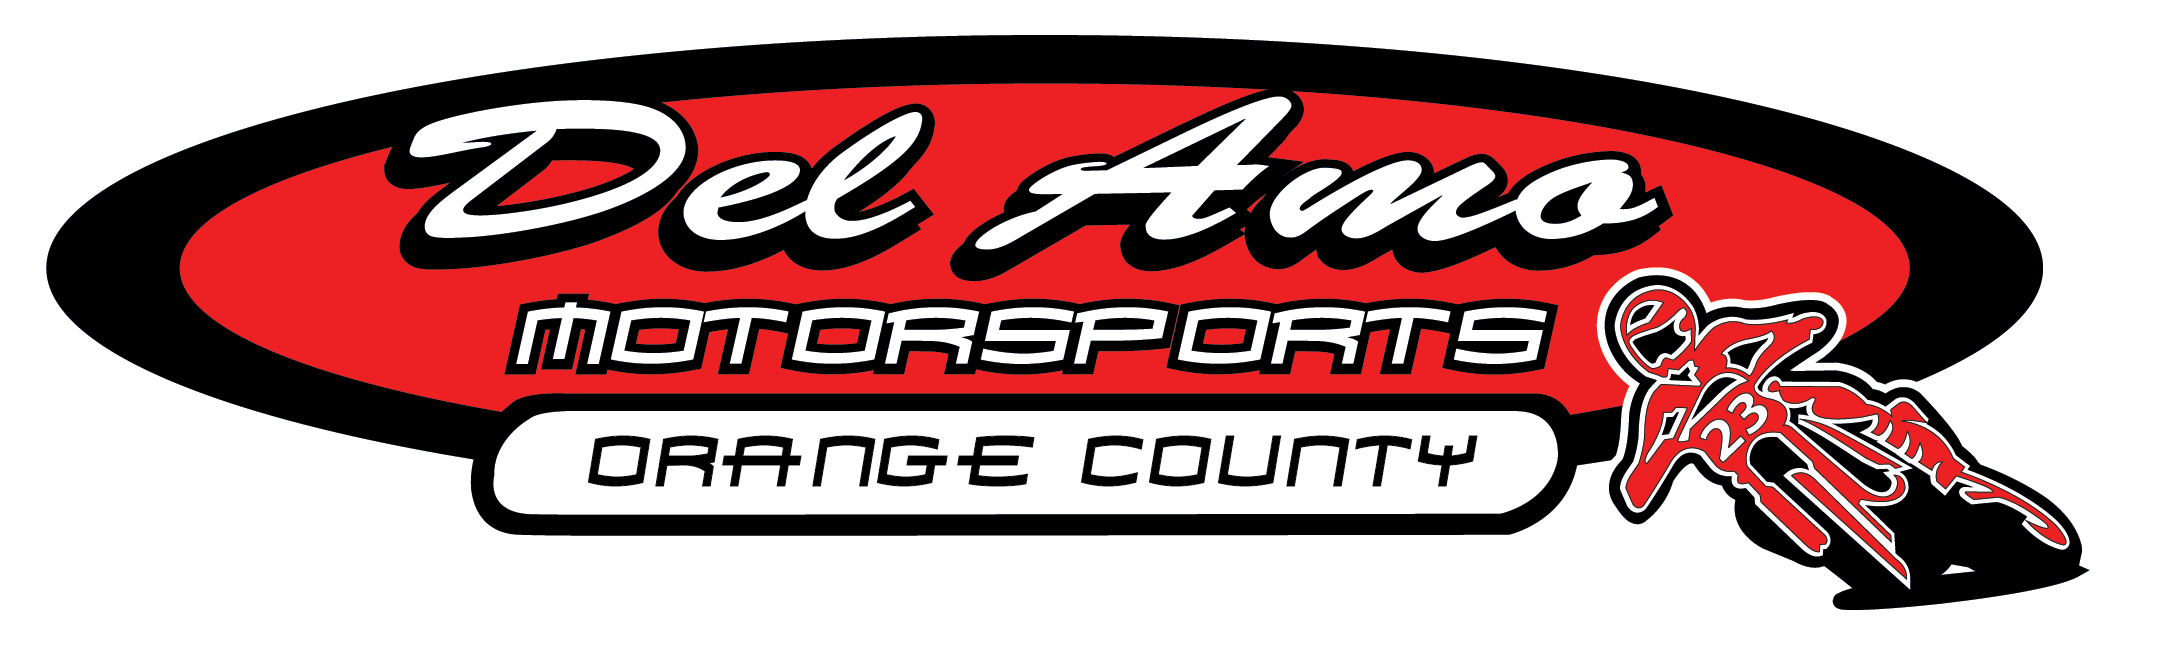 Del Amo Motorsports Orange County